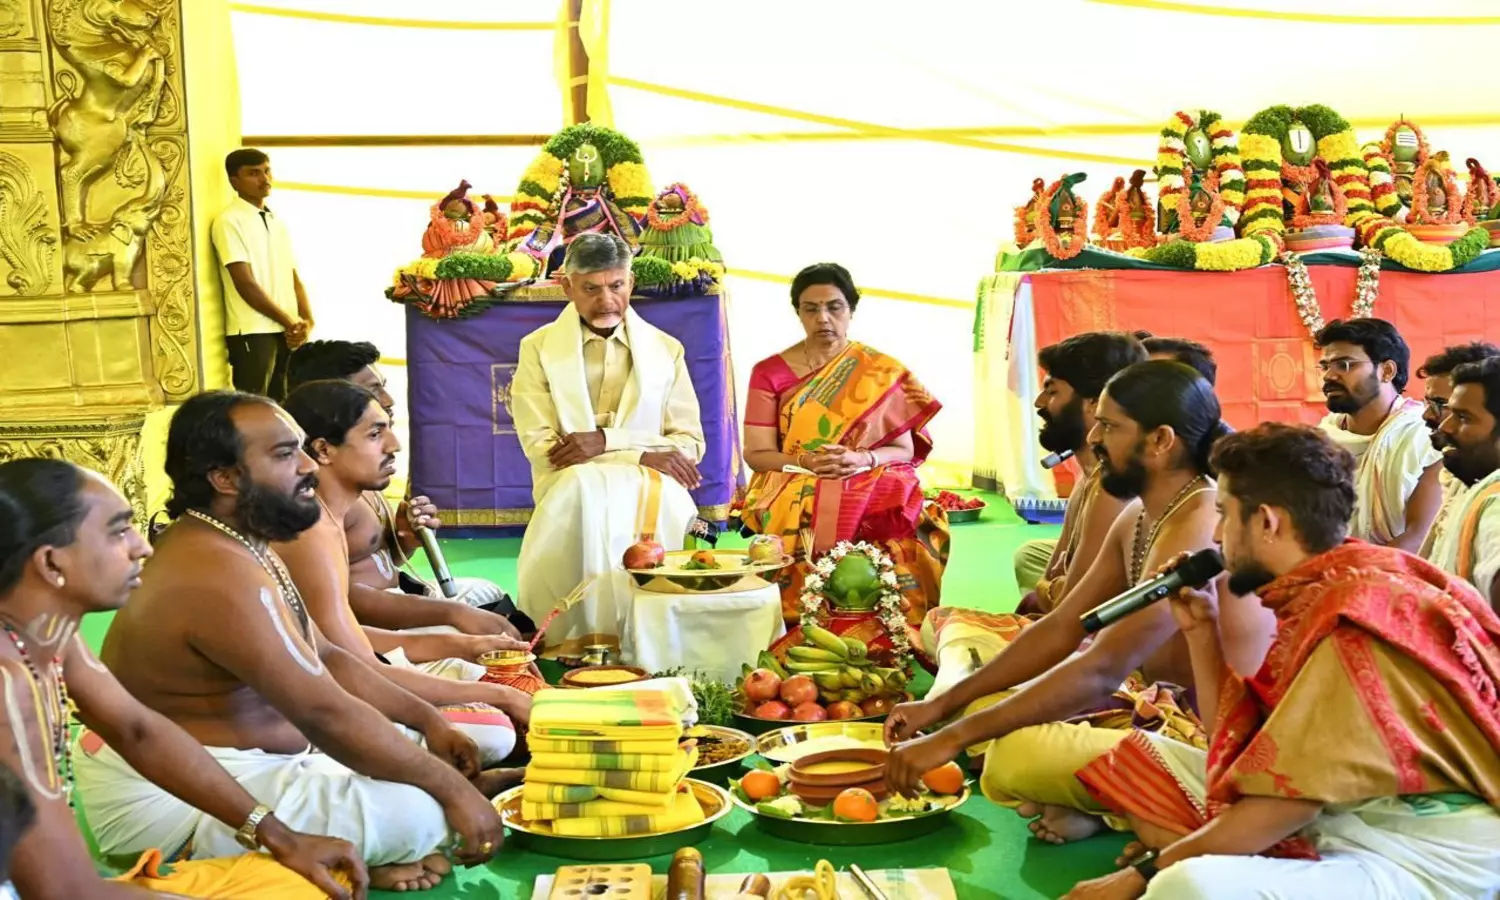 Chandrababu Naidu, along with wife Bhuvanewwari, performs Rajasyamala Yaagam